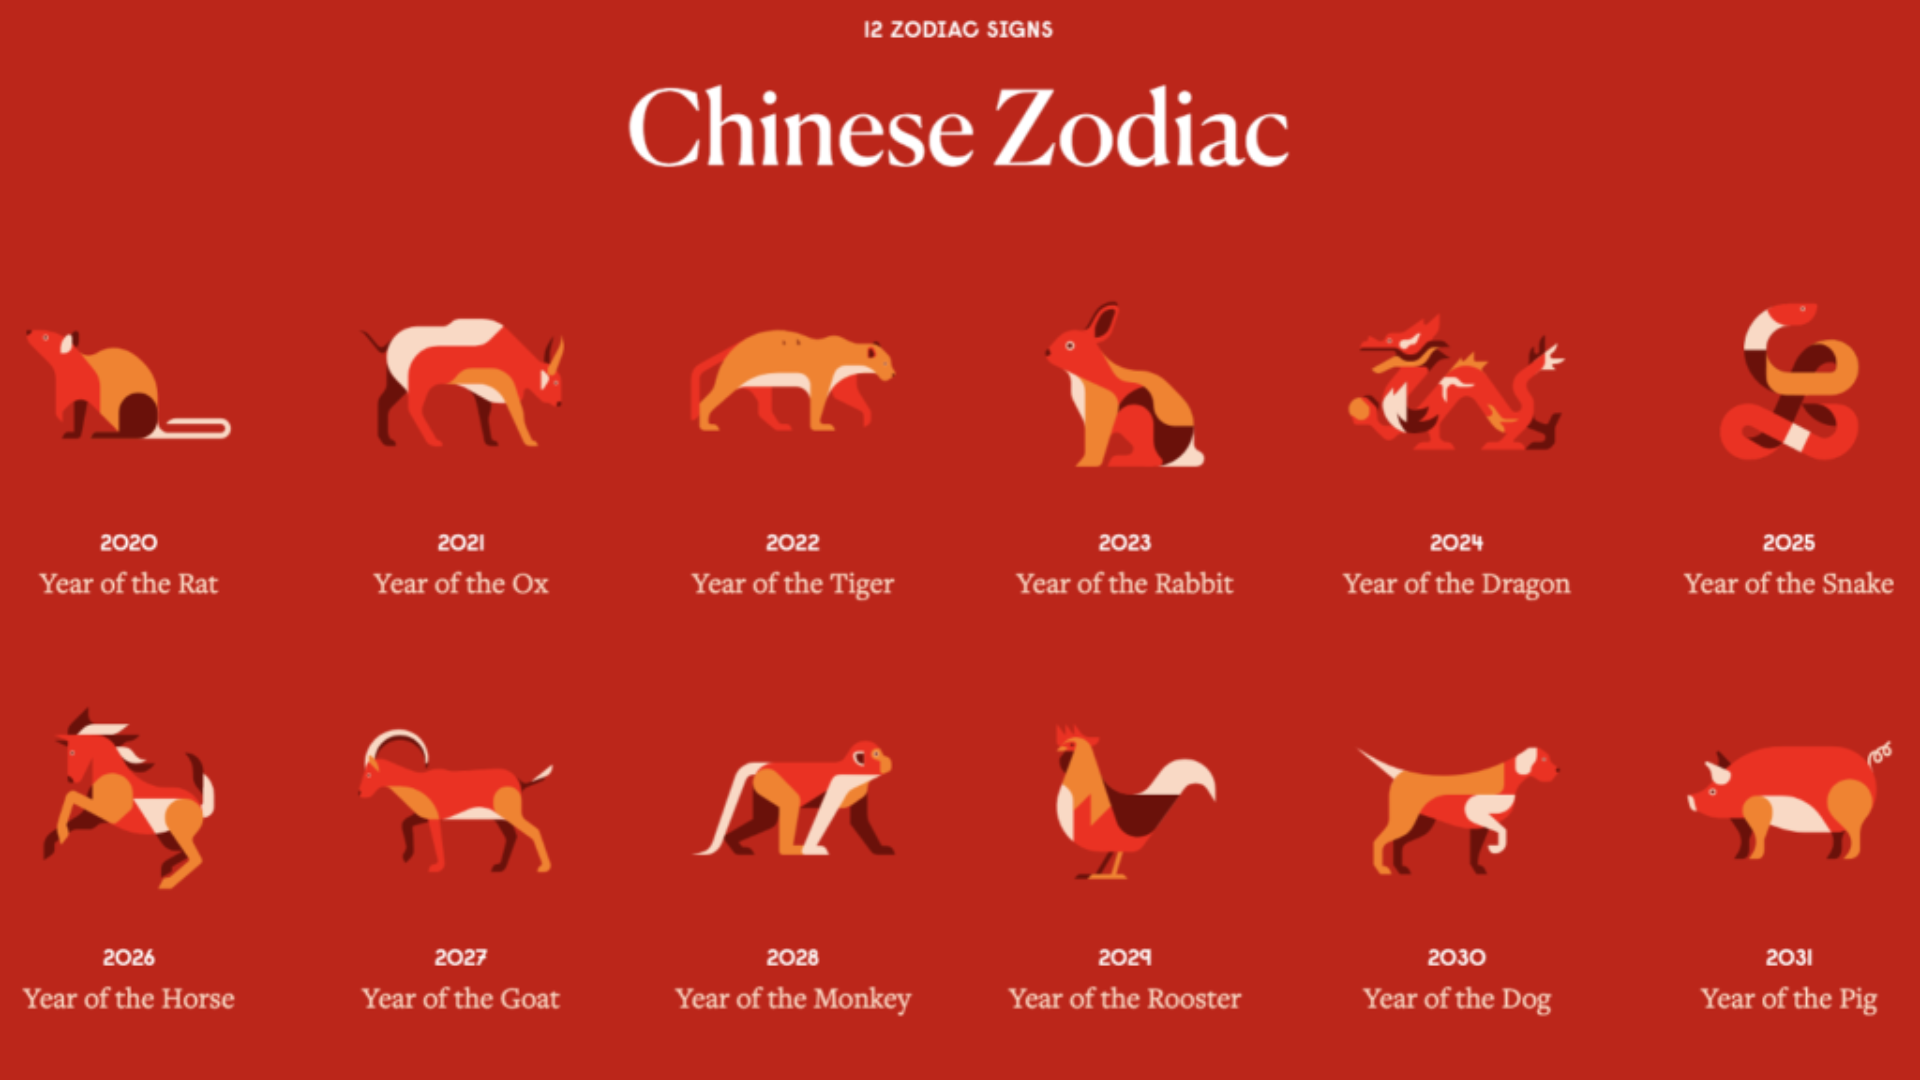 Chinese Zodiac signs